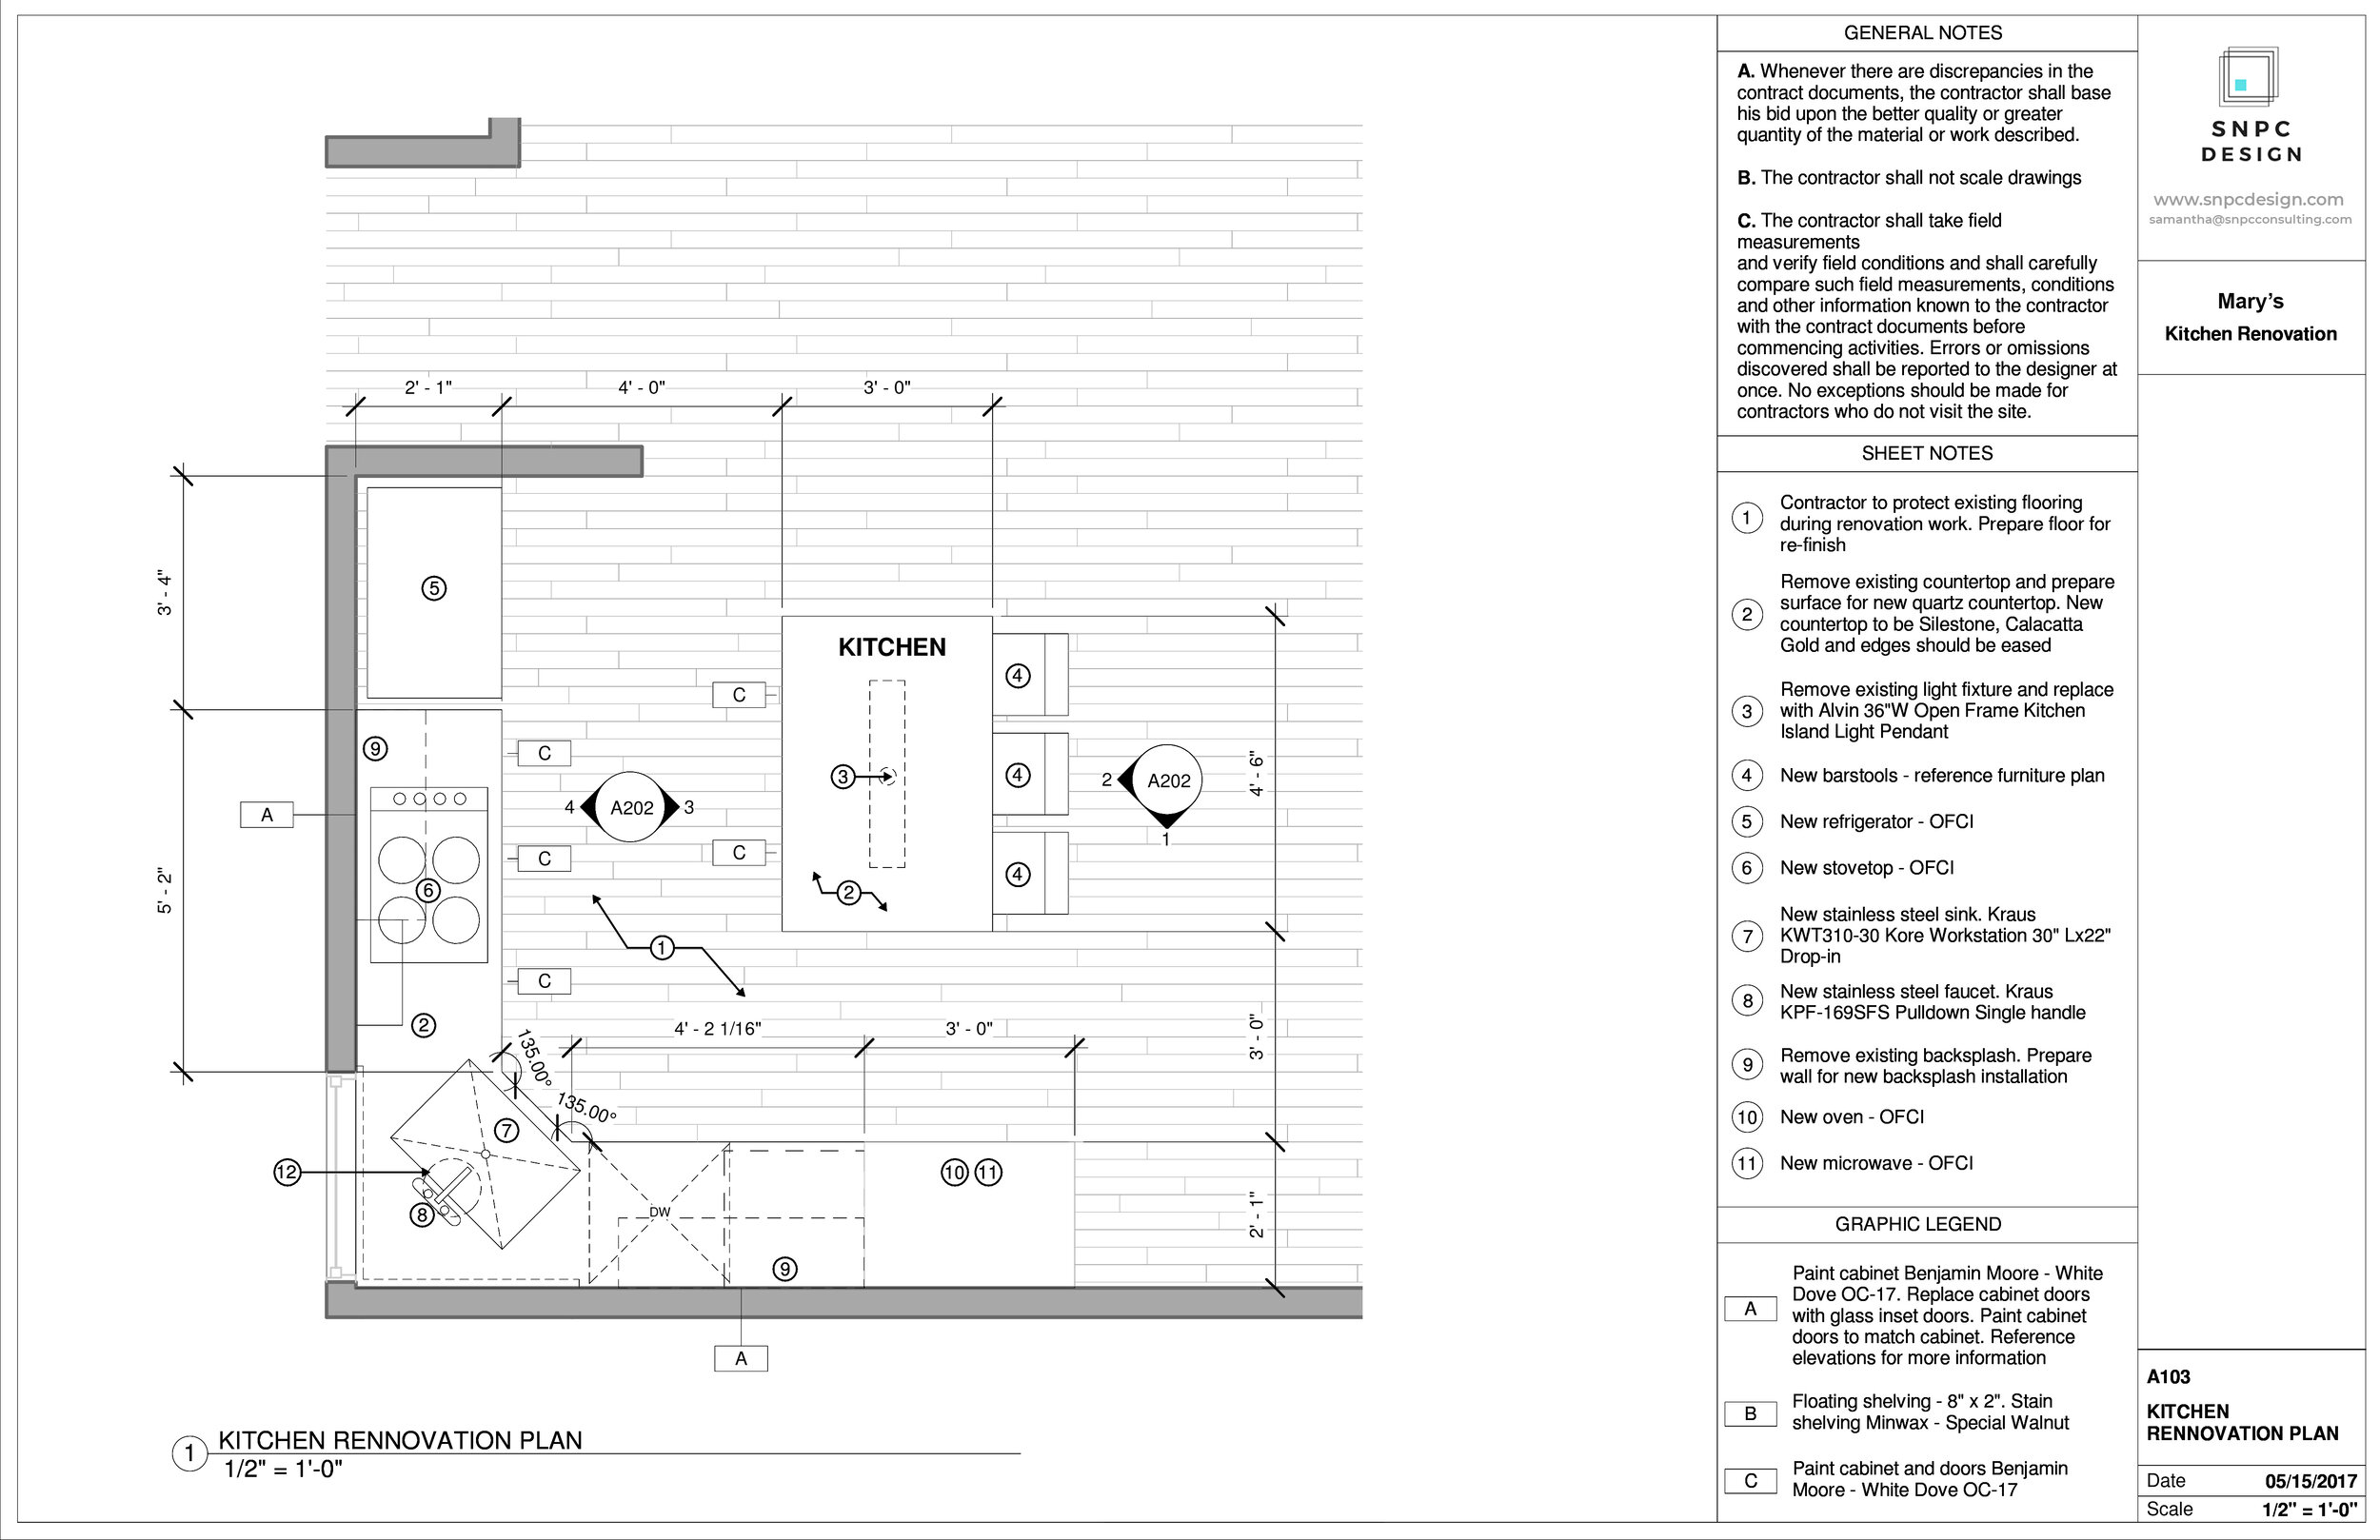 SNPC Design - Kitchen Rennovation Plan.jpg